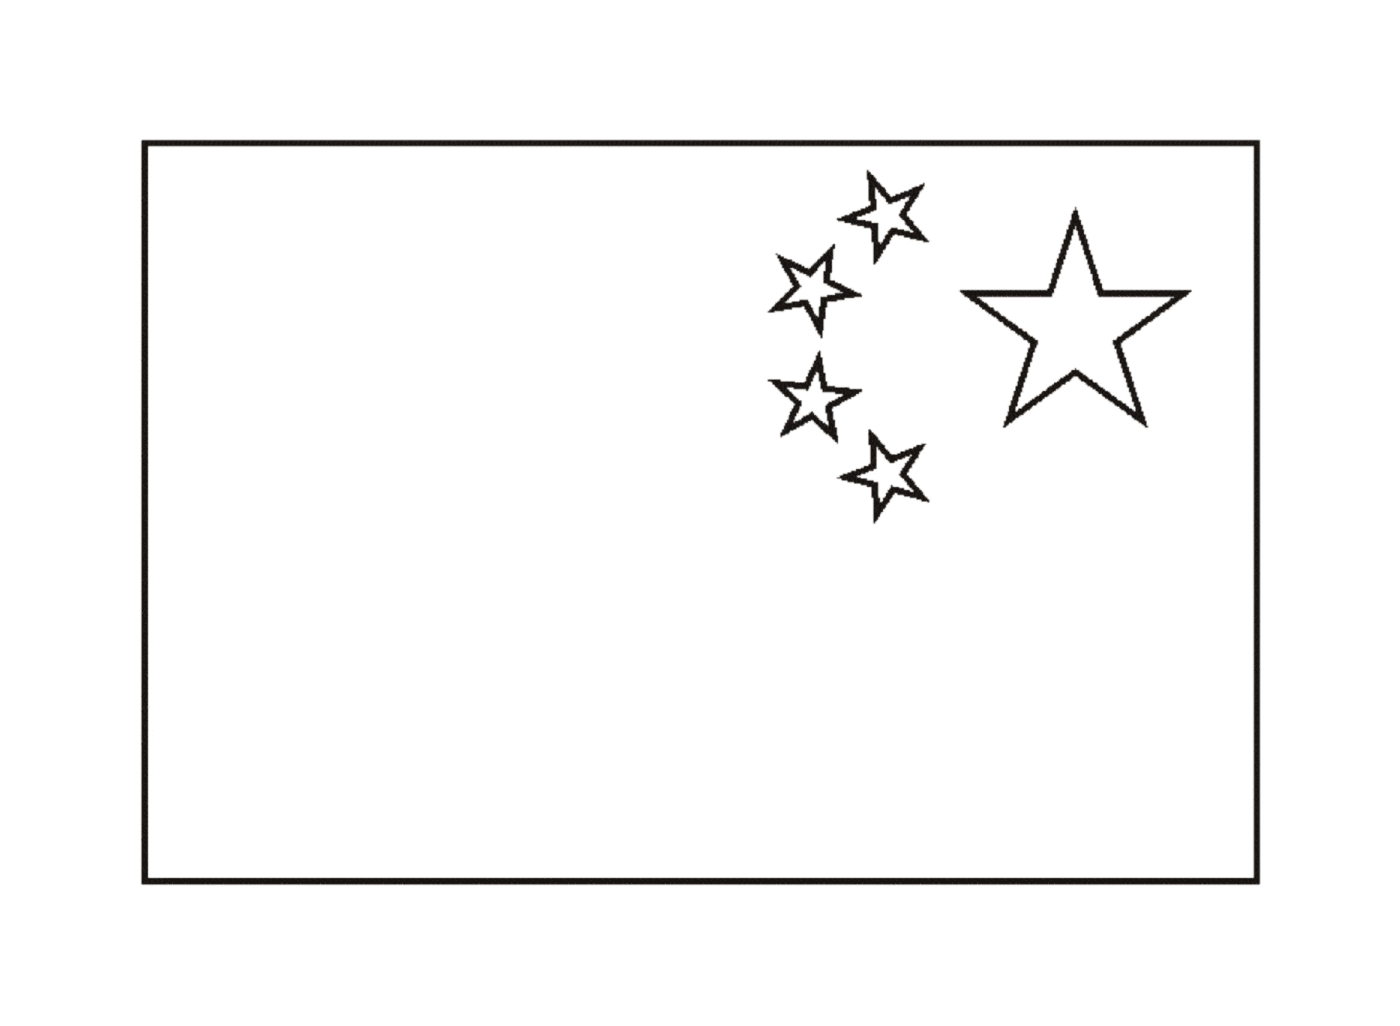  Una bandera de China 